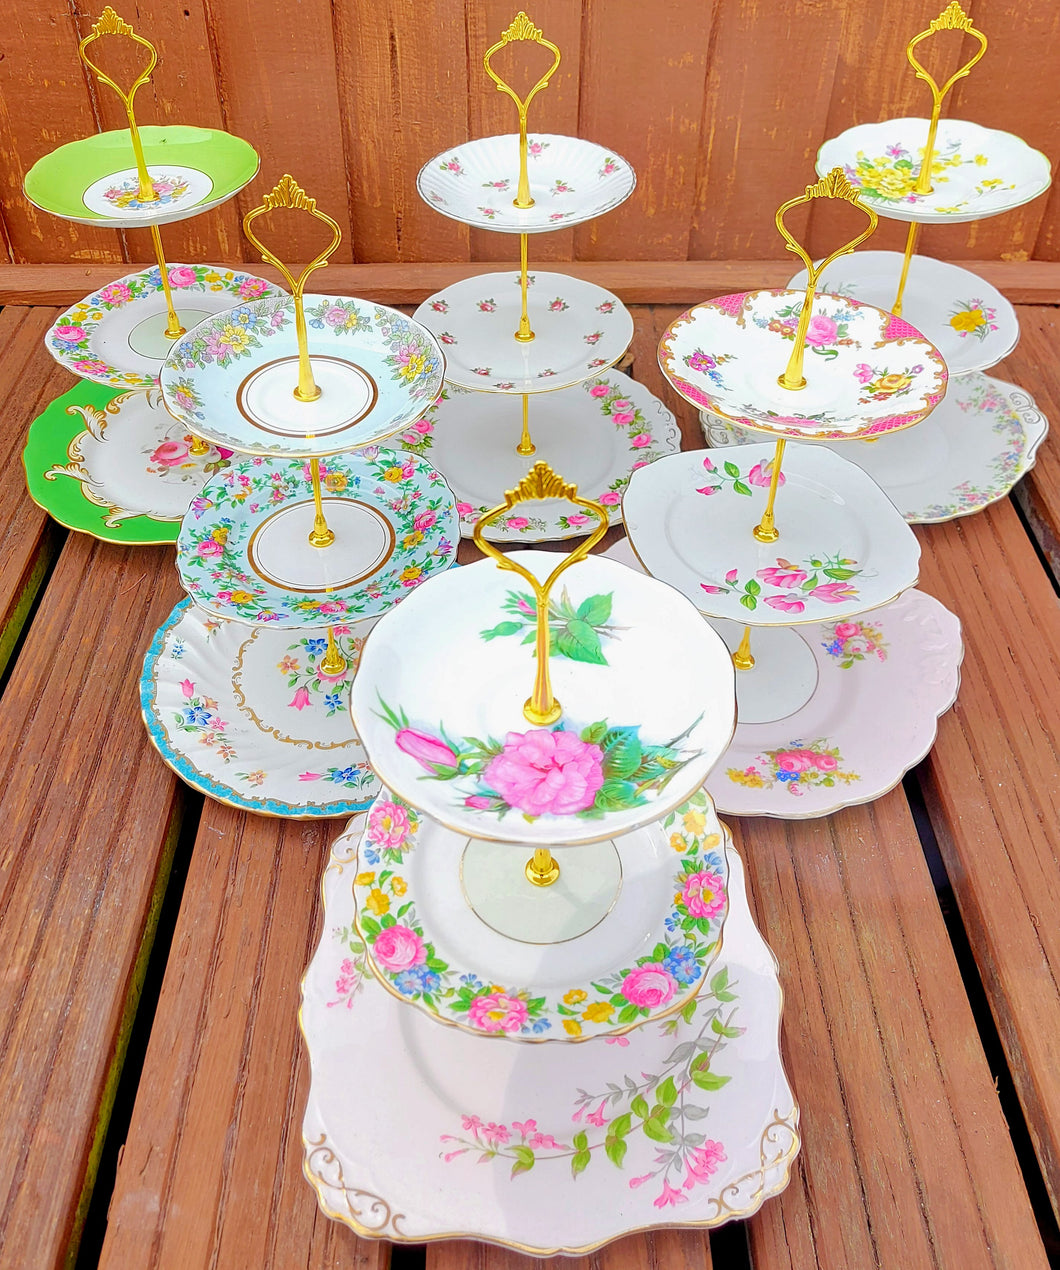 9 (27pcs) x Vintage 3 Tier Mismatched Floral Cake Stands, Afternoon Tea Party Wedding Crockery Bulk Plates Trays